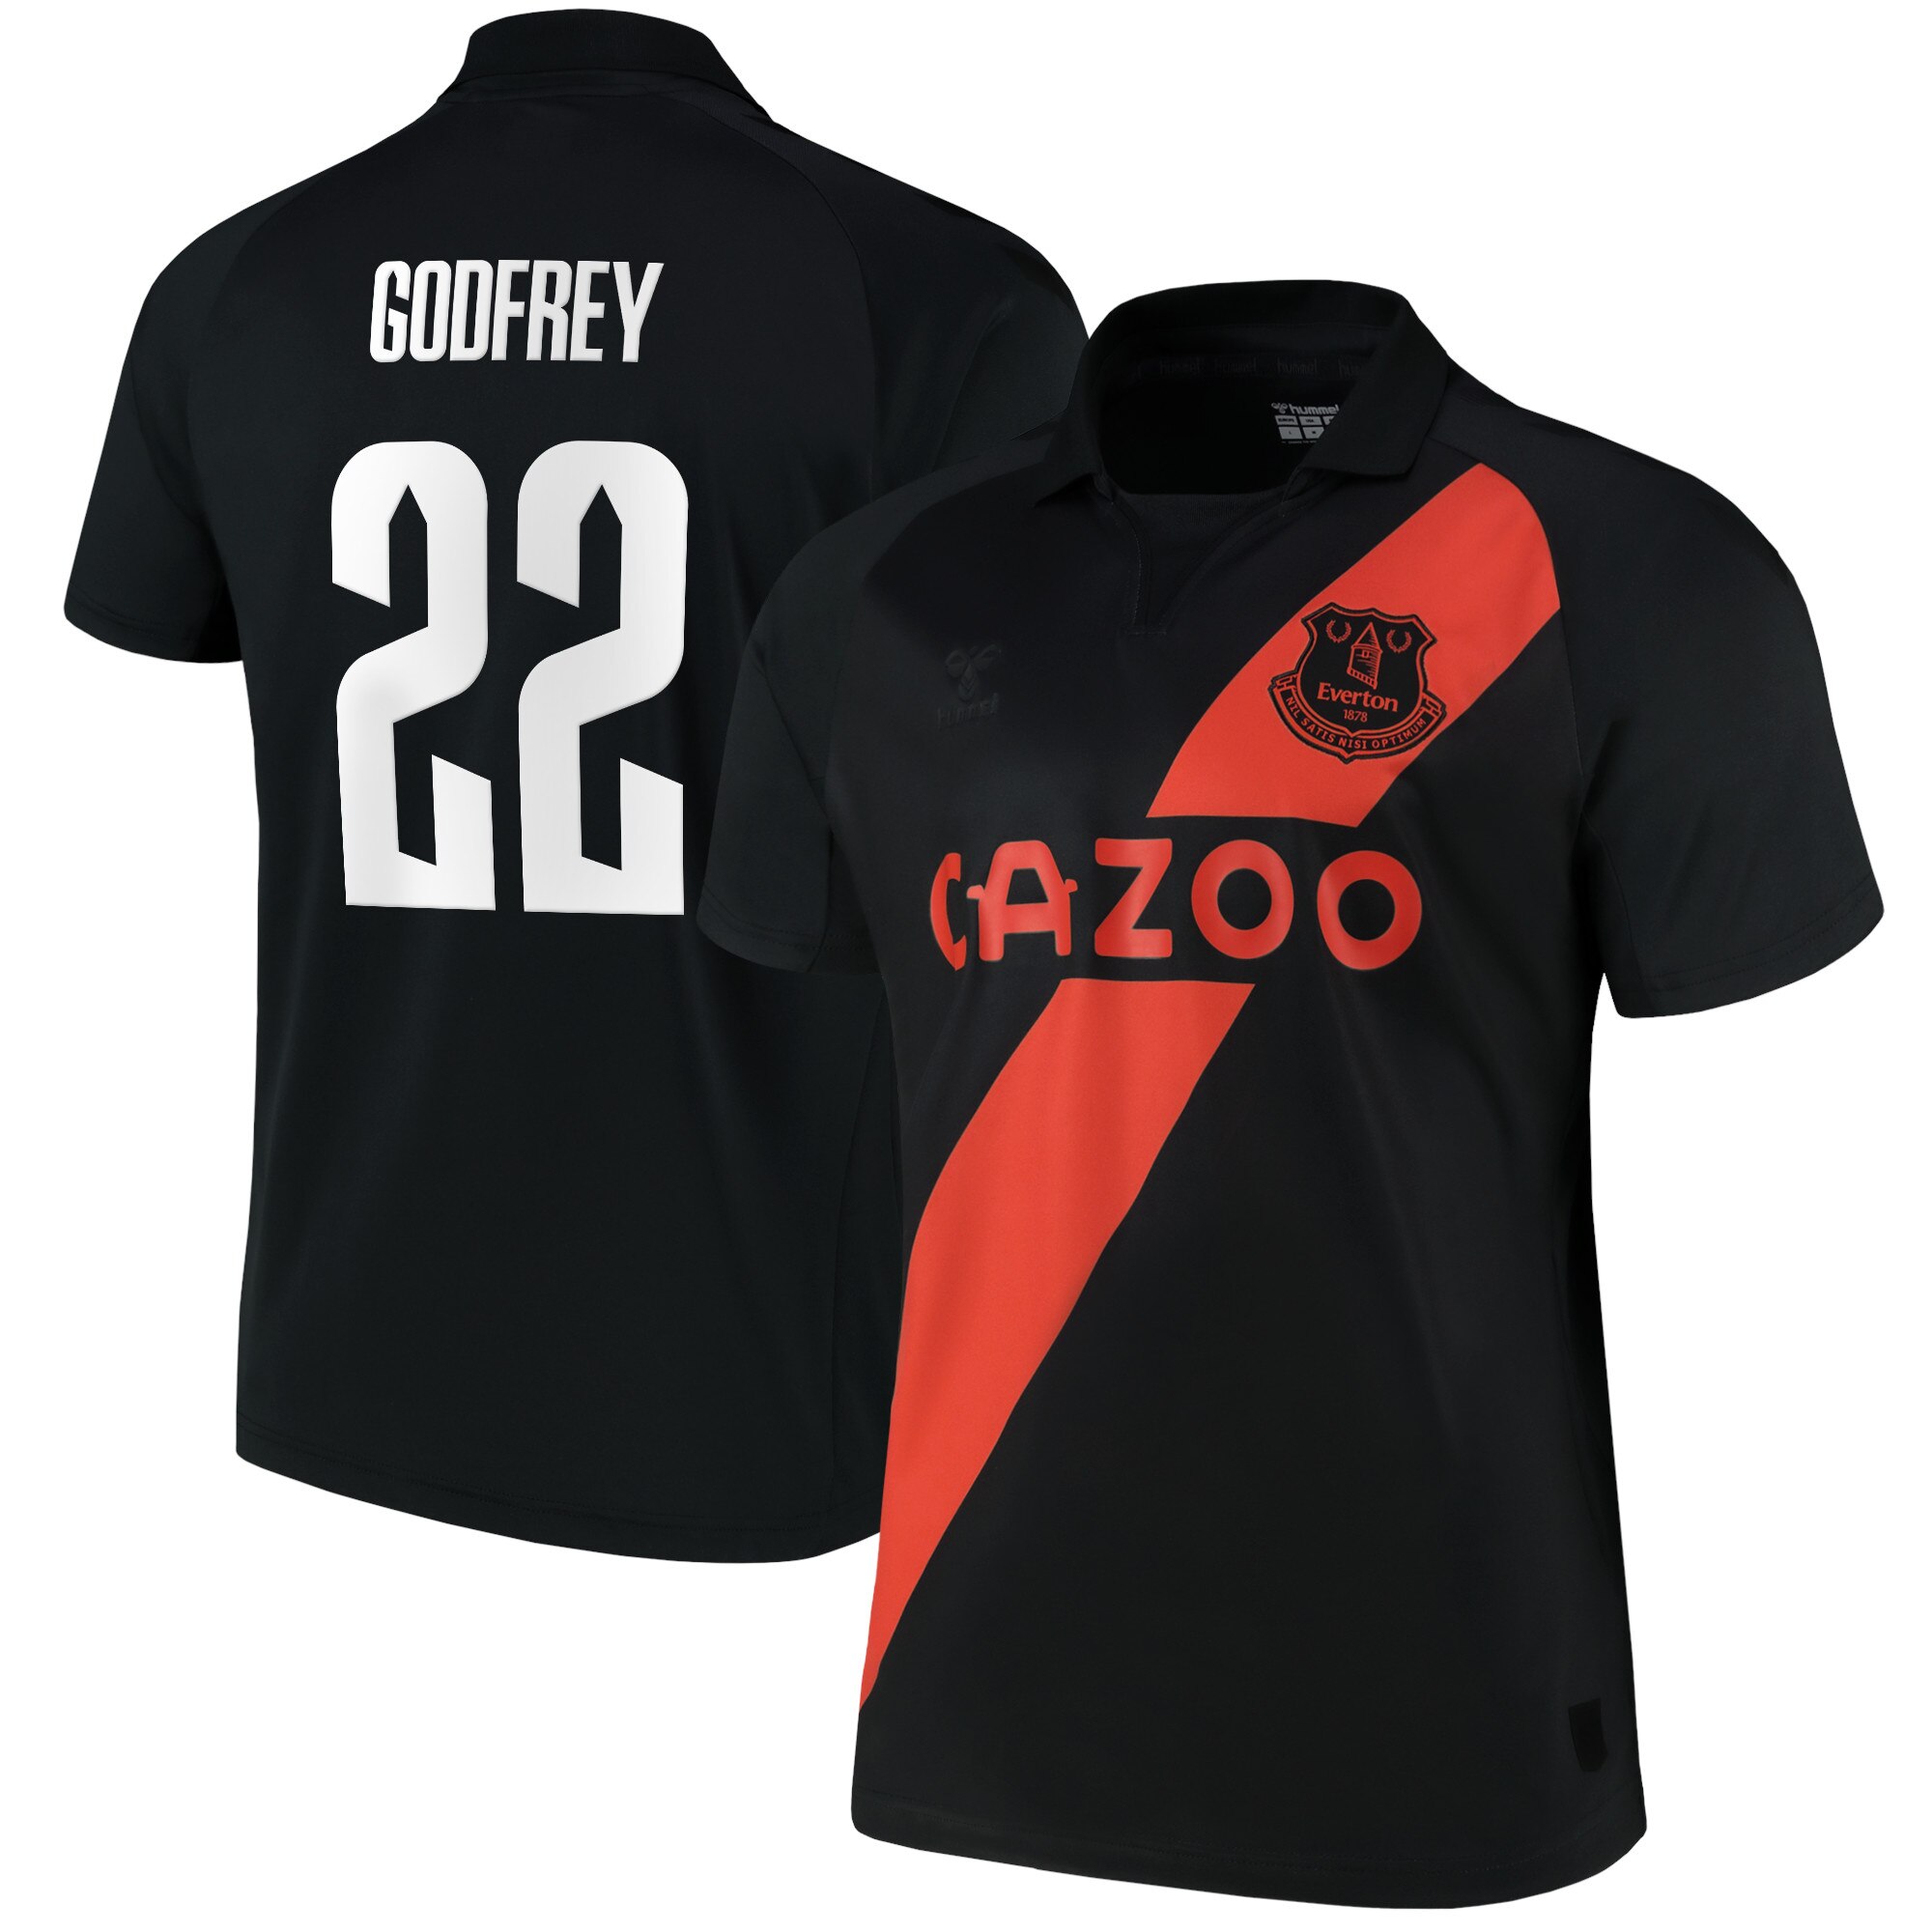 Everton Cup Away Shirt 2021-22 with Godfrey 22 printing